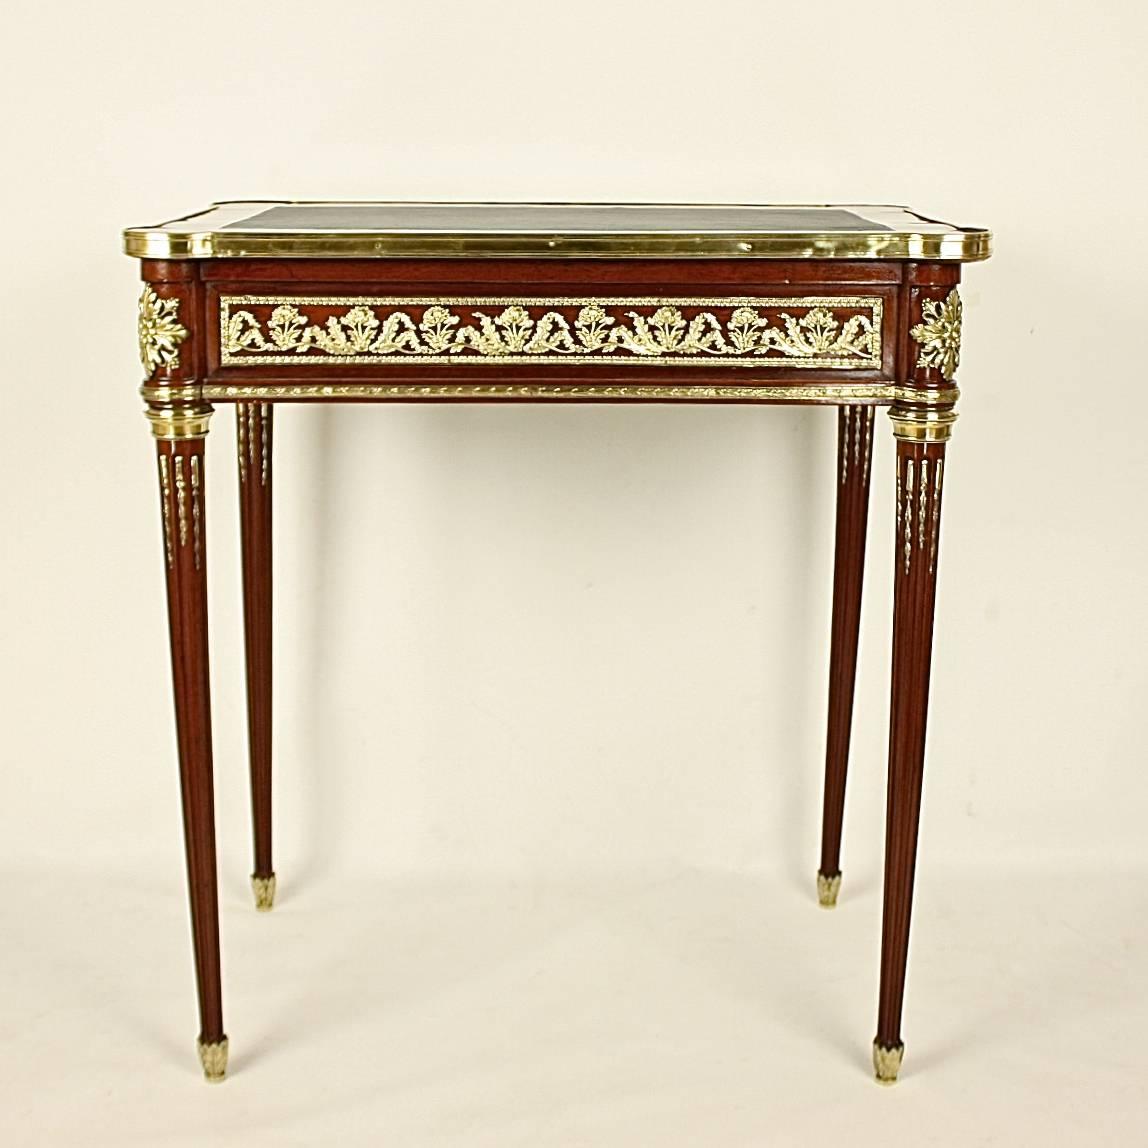 Rare Small Louis XVI Style Mahogany Bureau Plat or Side Table (Französisch)